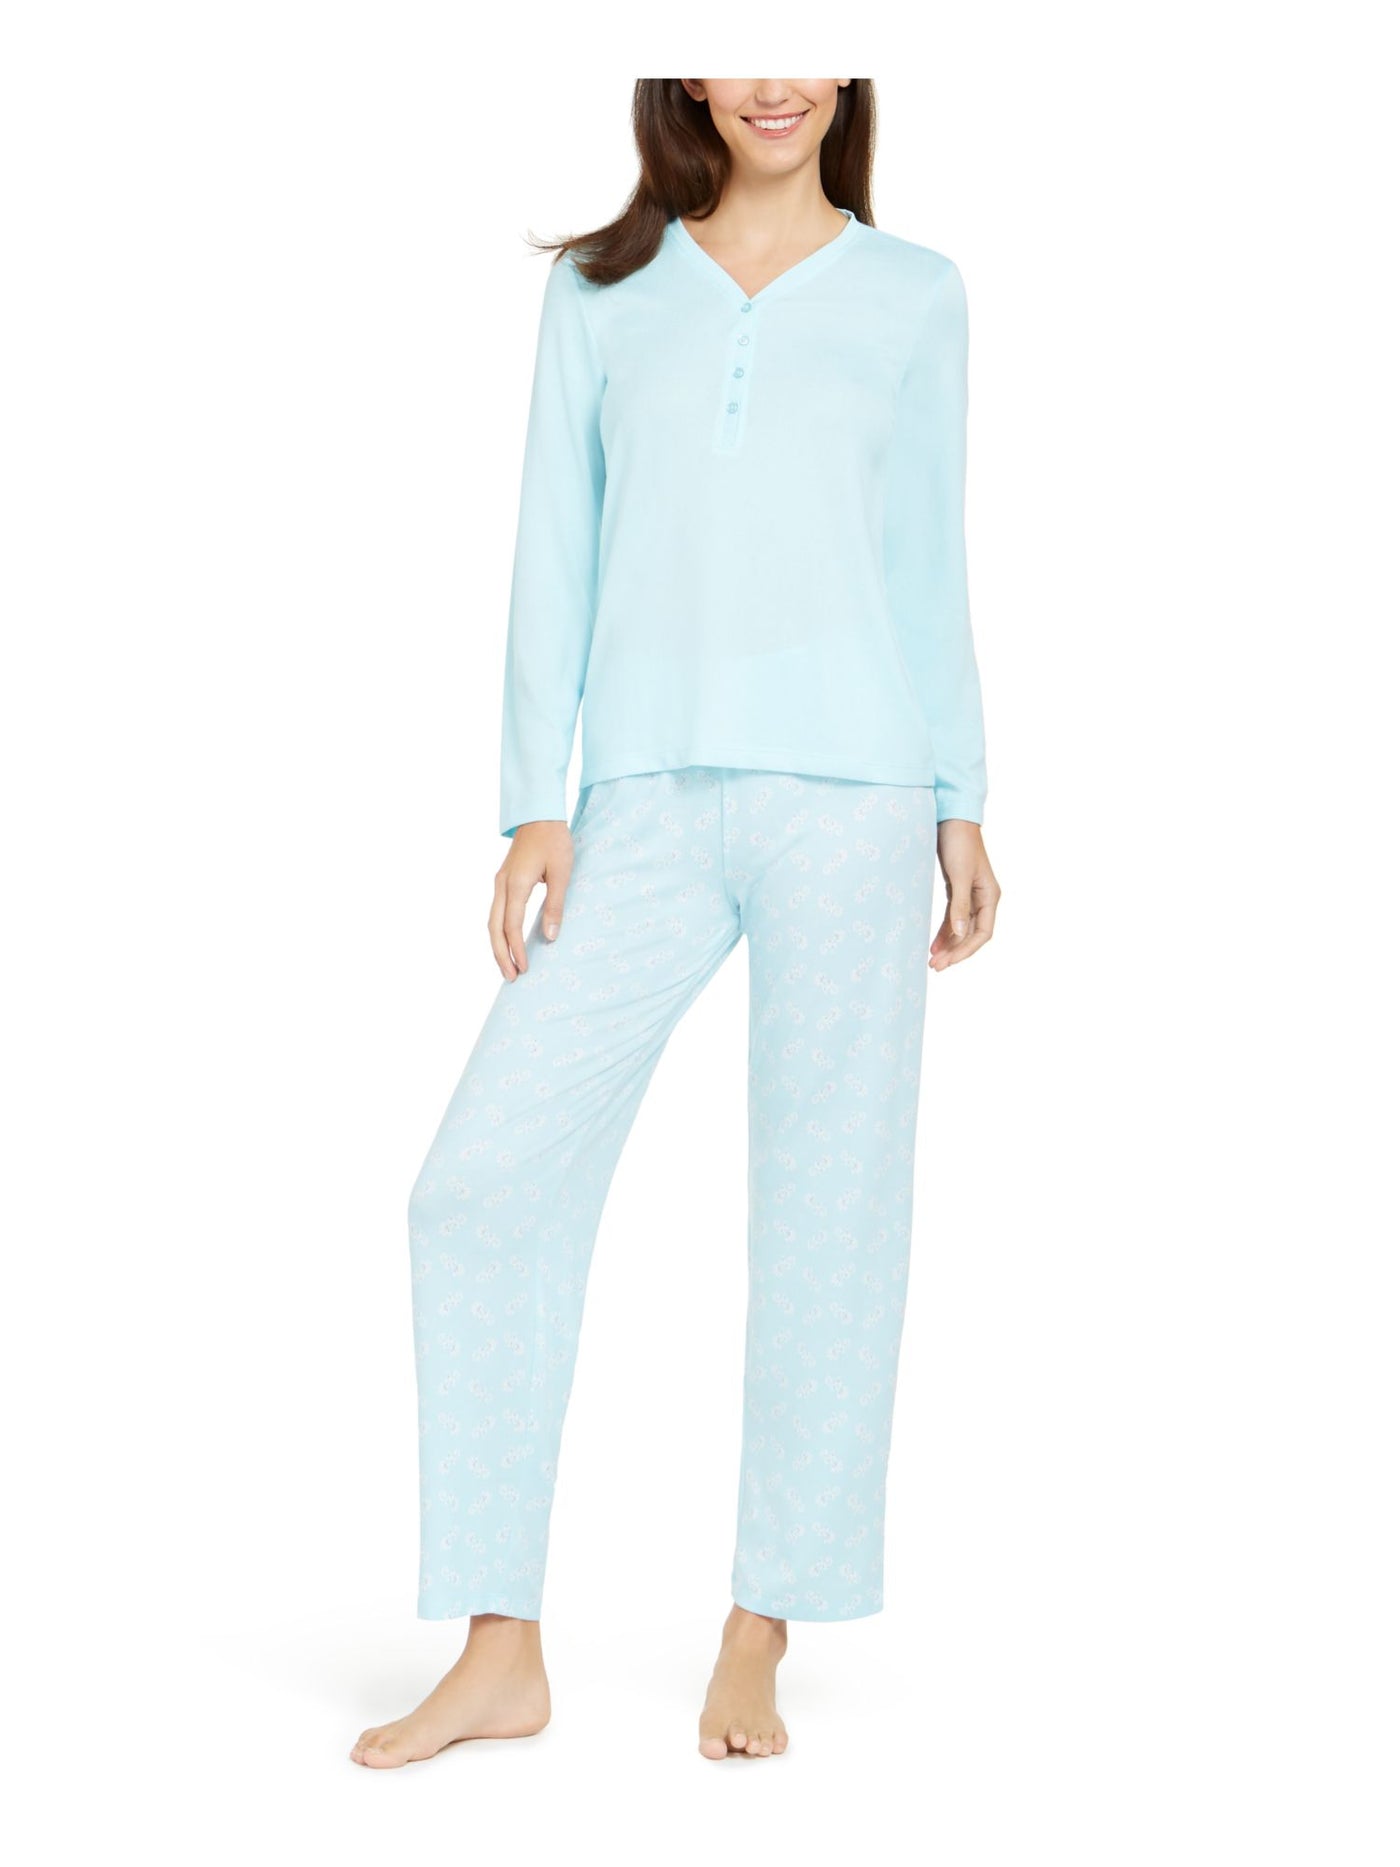 CHARTER CLUB INTIMATES Womens Light Blue T-Shirt Top Straight leg Pants Pajamas XS